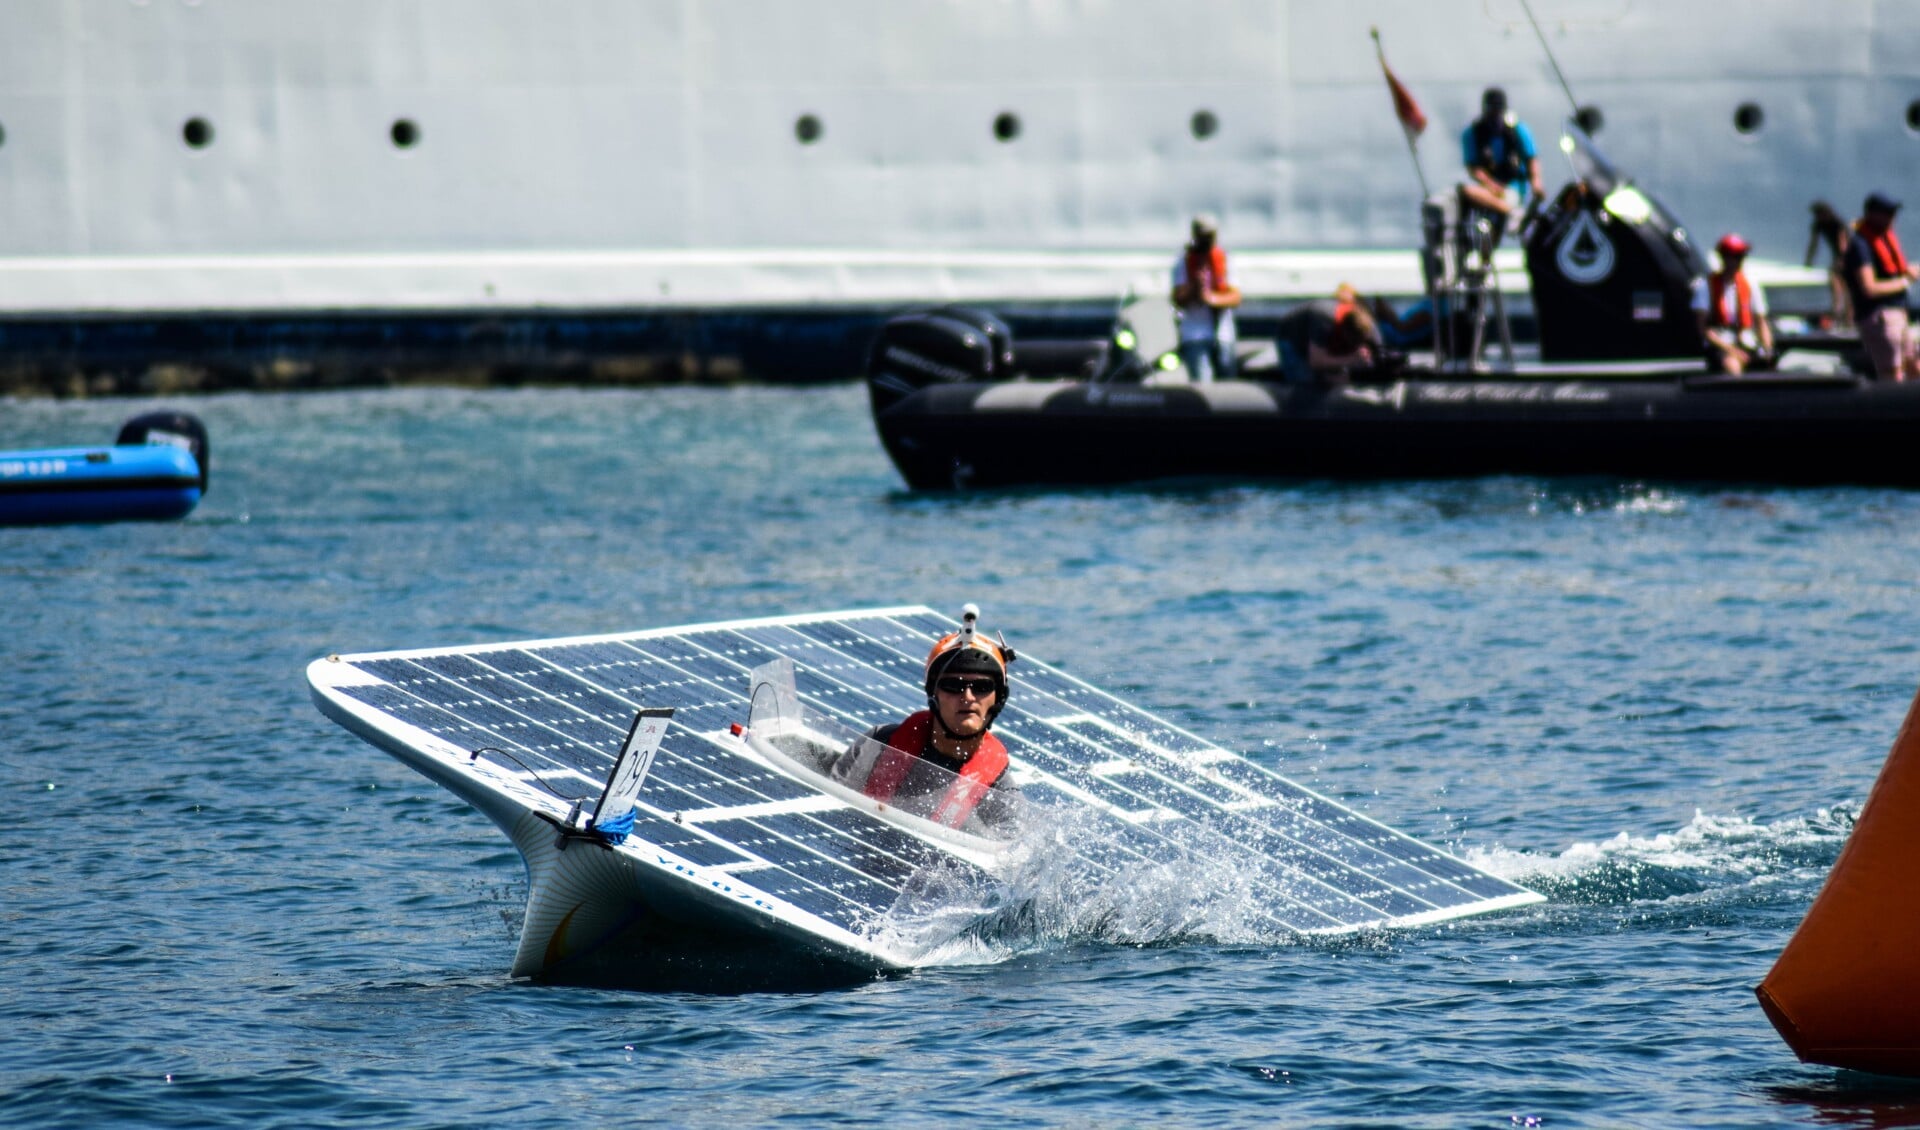 De TU Delft Solar Boat tijdens de race in Monaco in juli 2018 (Foto: PR)